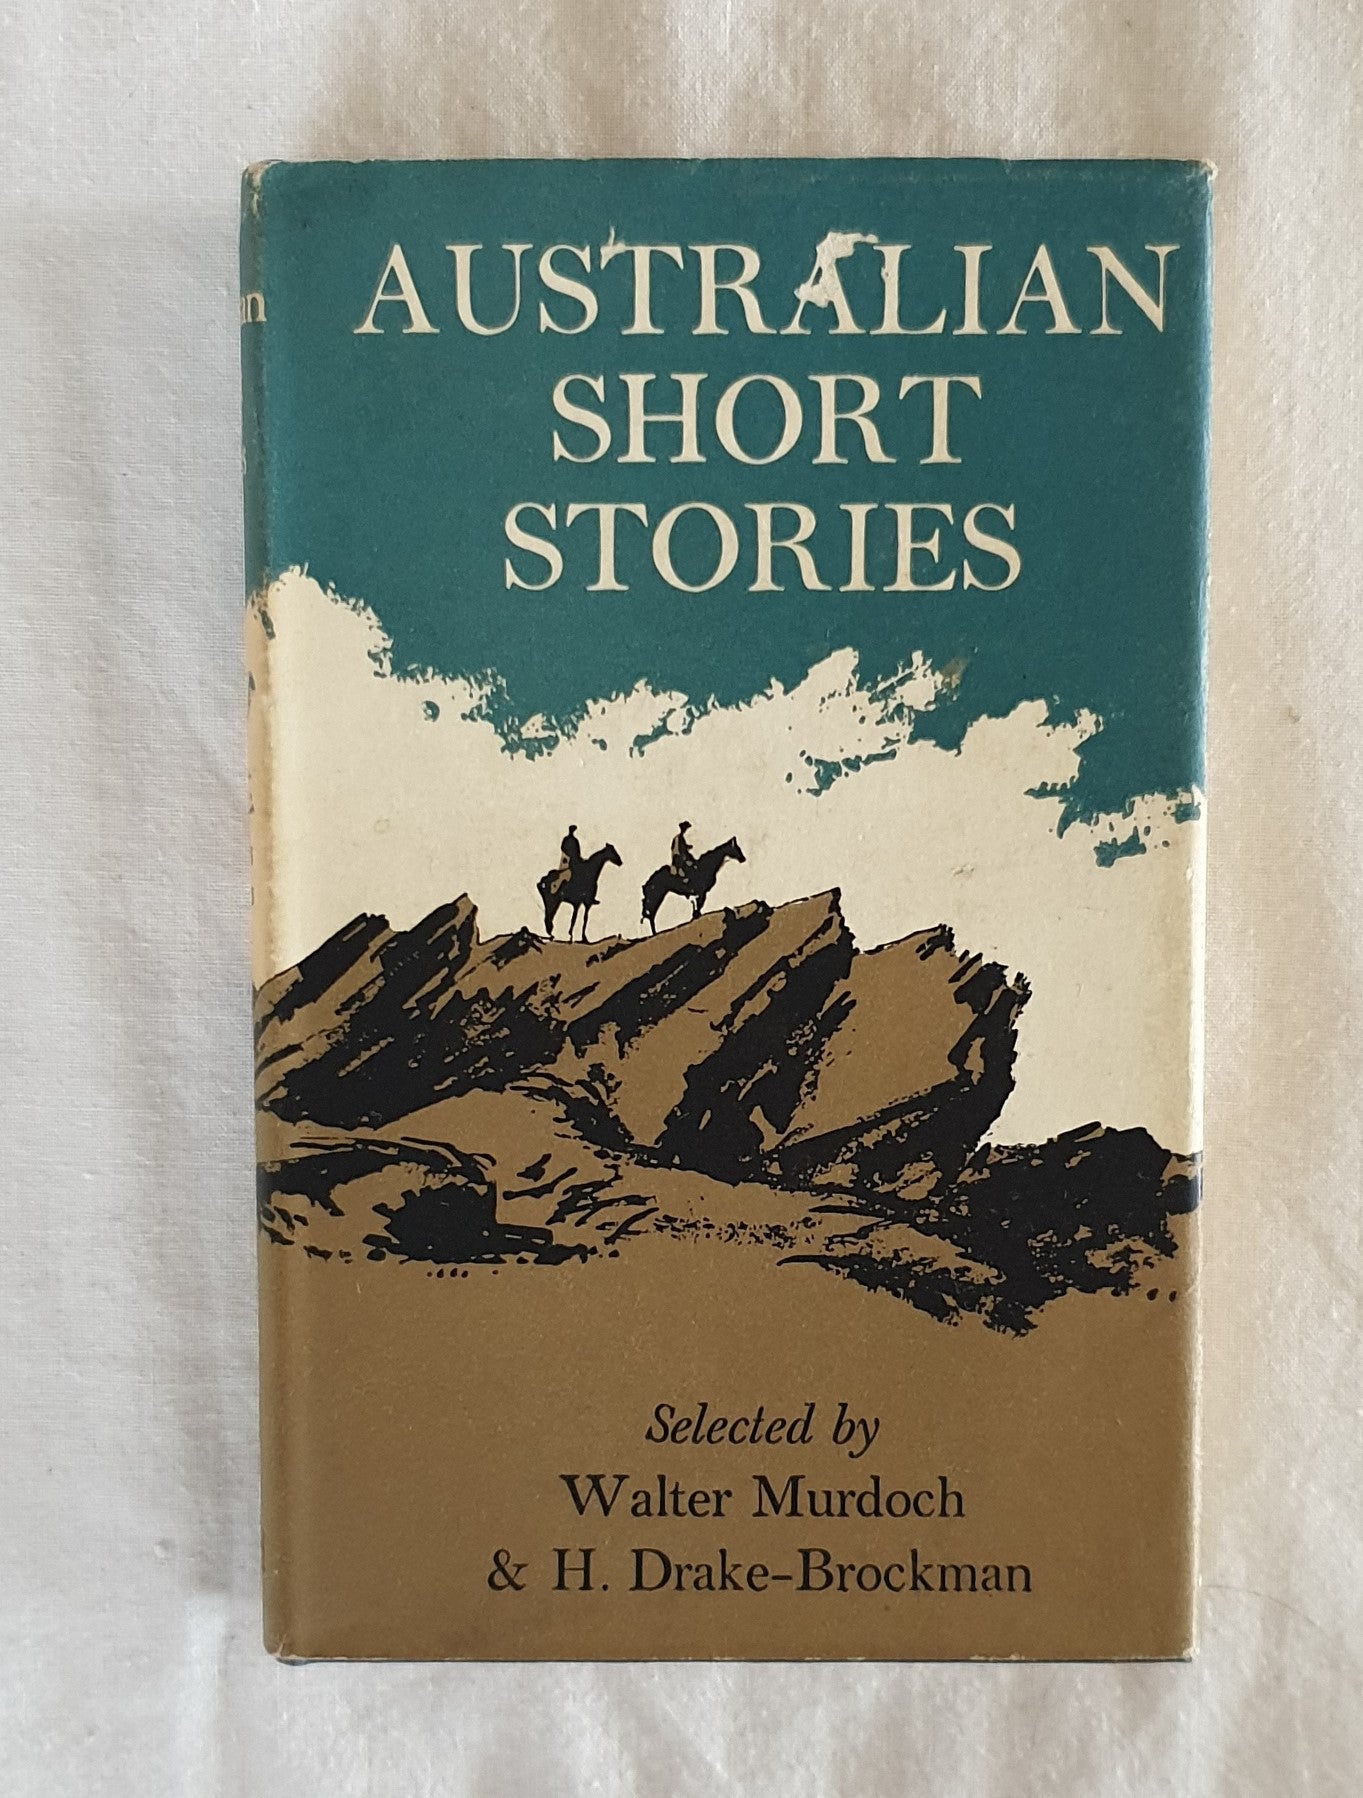 Australian Short Stories by Walter Murdoch and H. Drake-Brockman